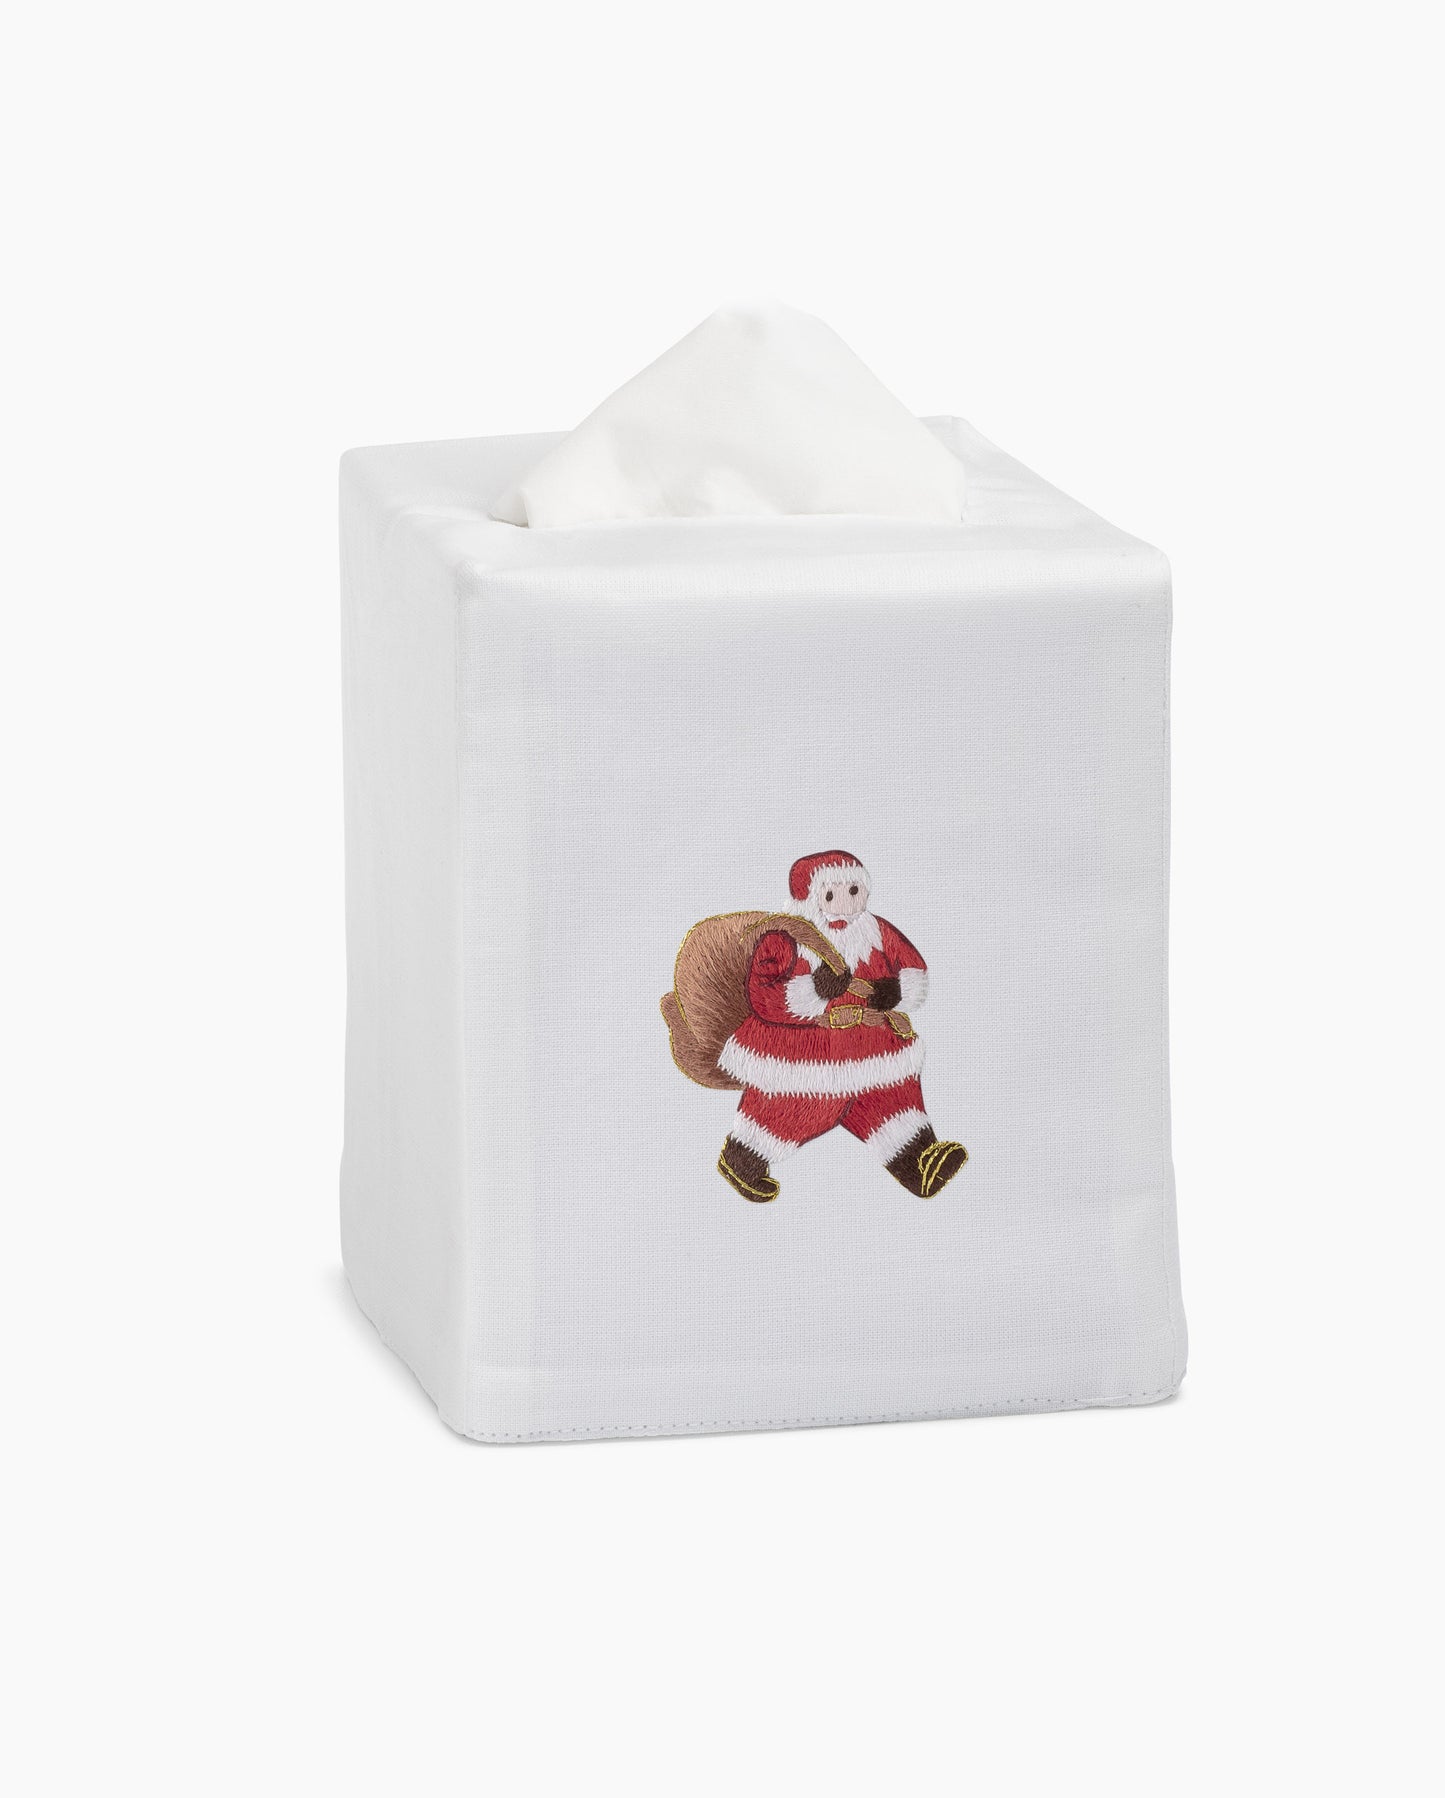 Santa Tissue Box Cover